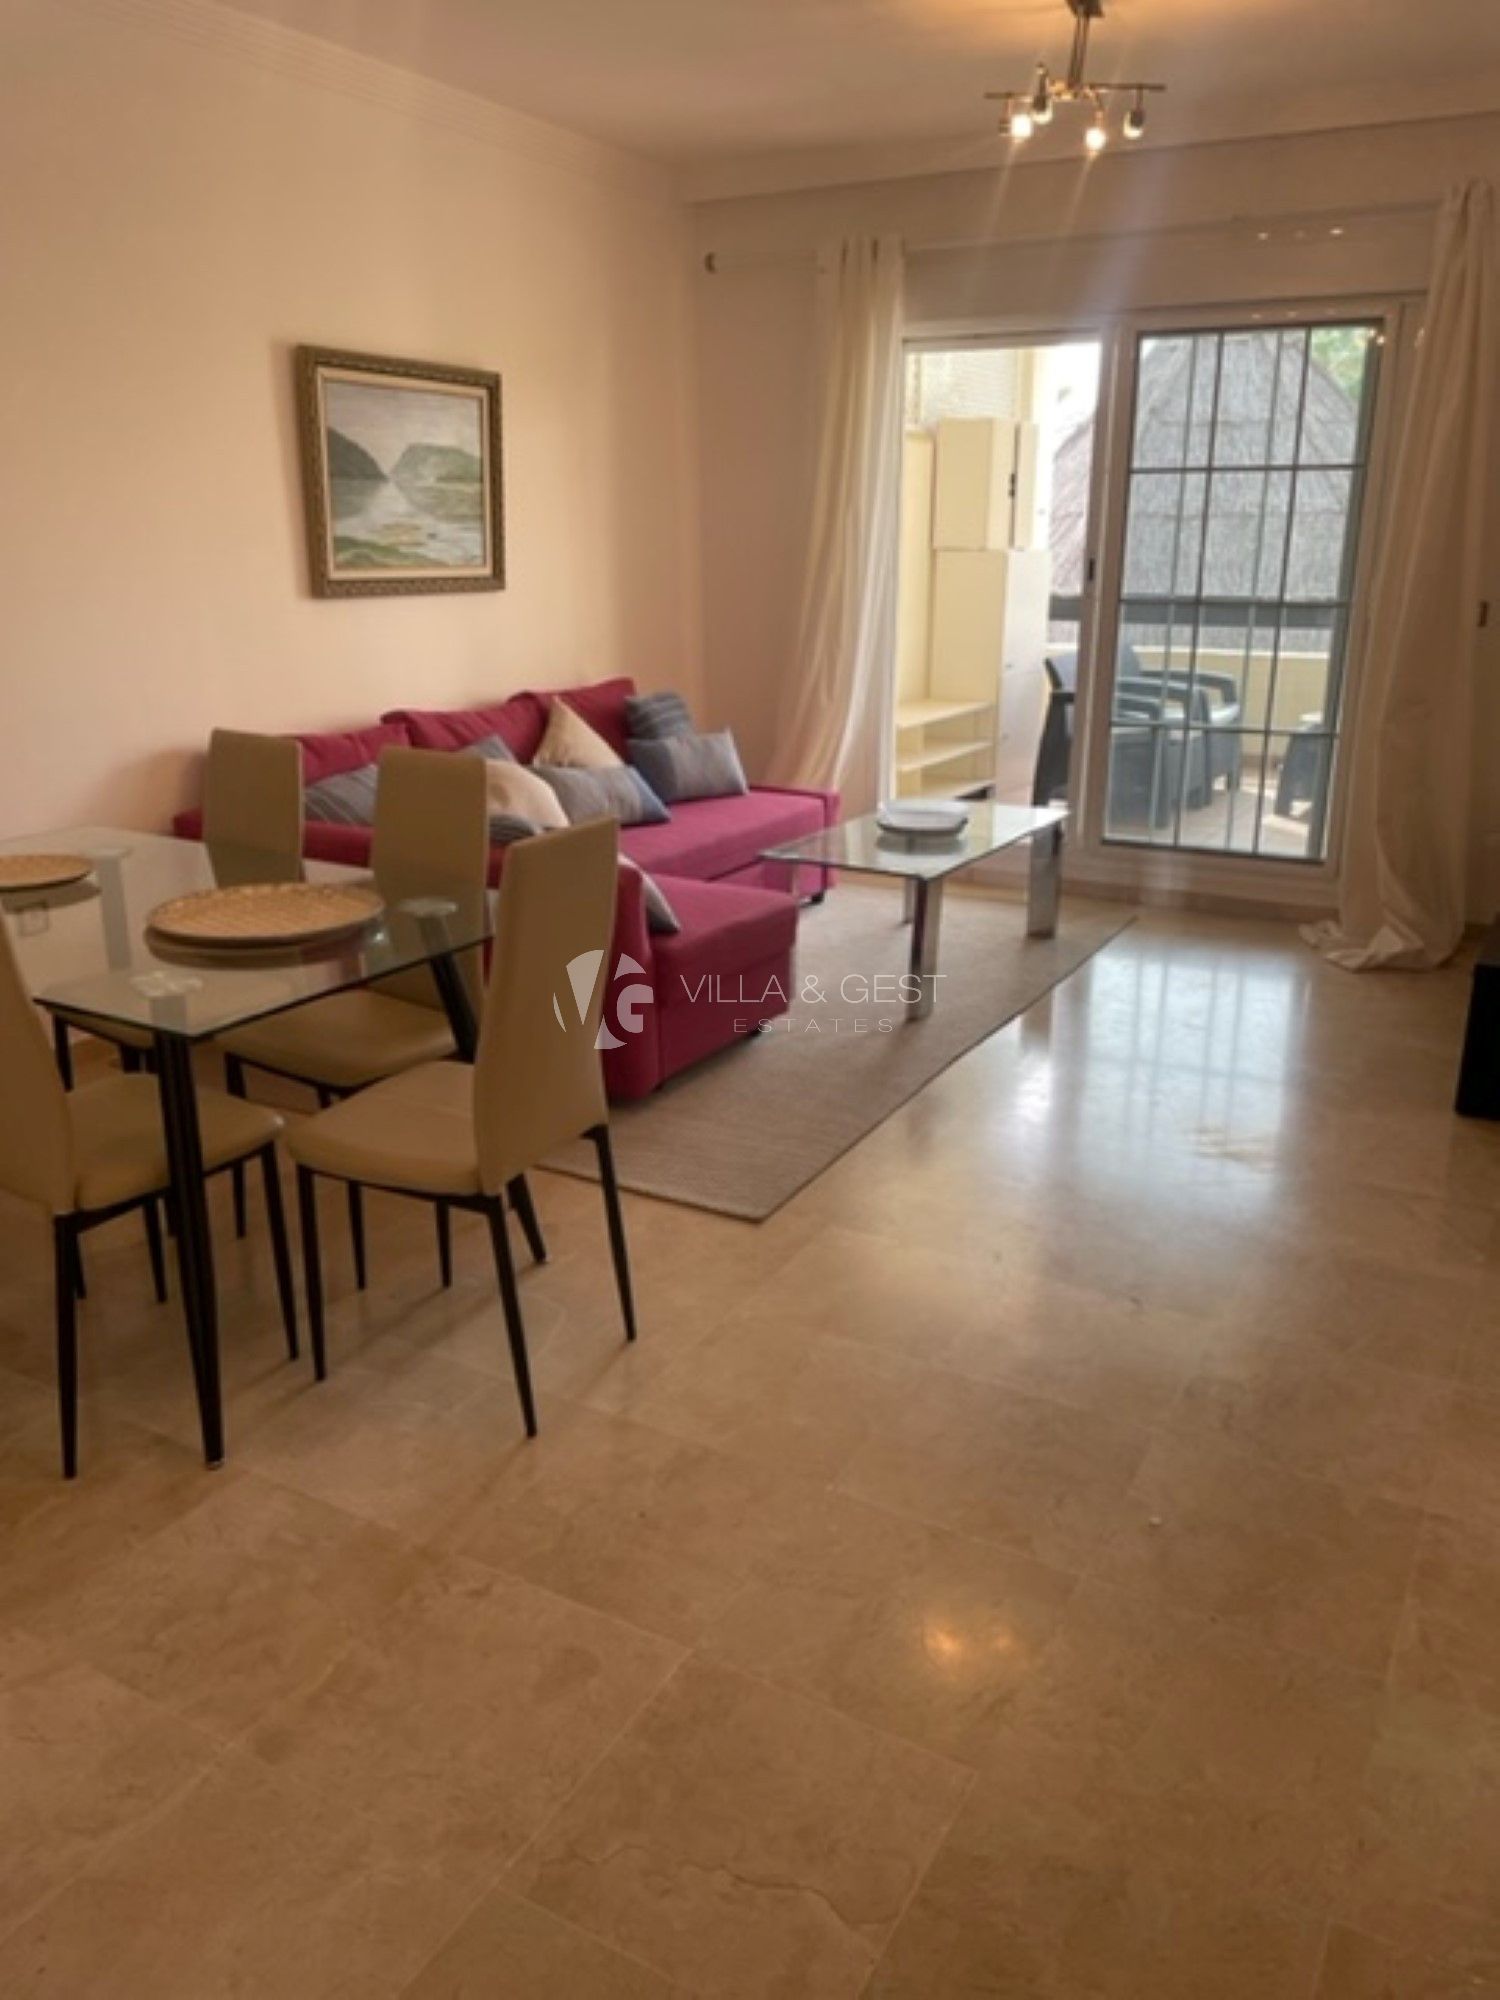 Apartment for rent in Manilva, Costa del Sol